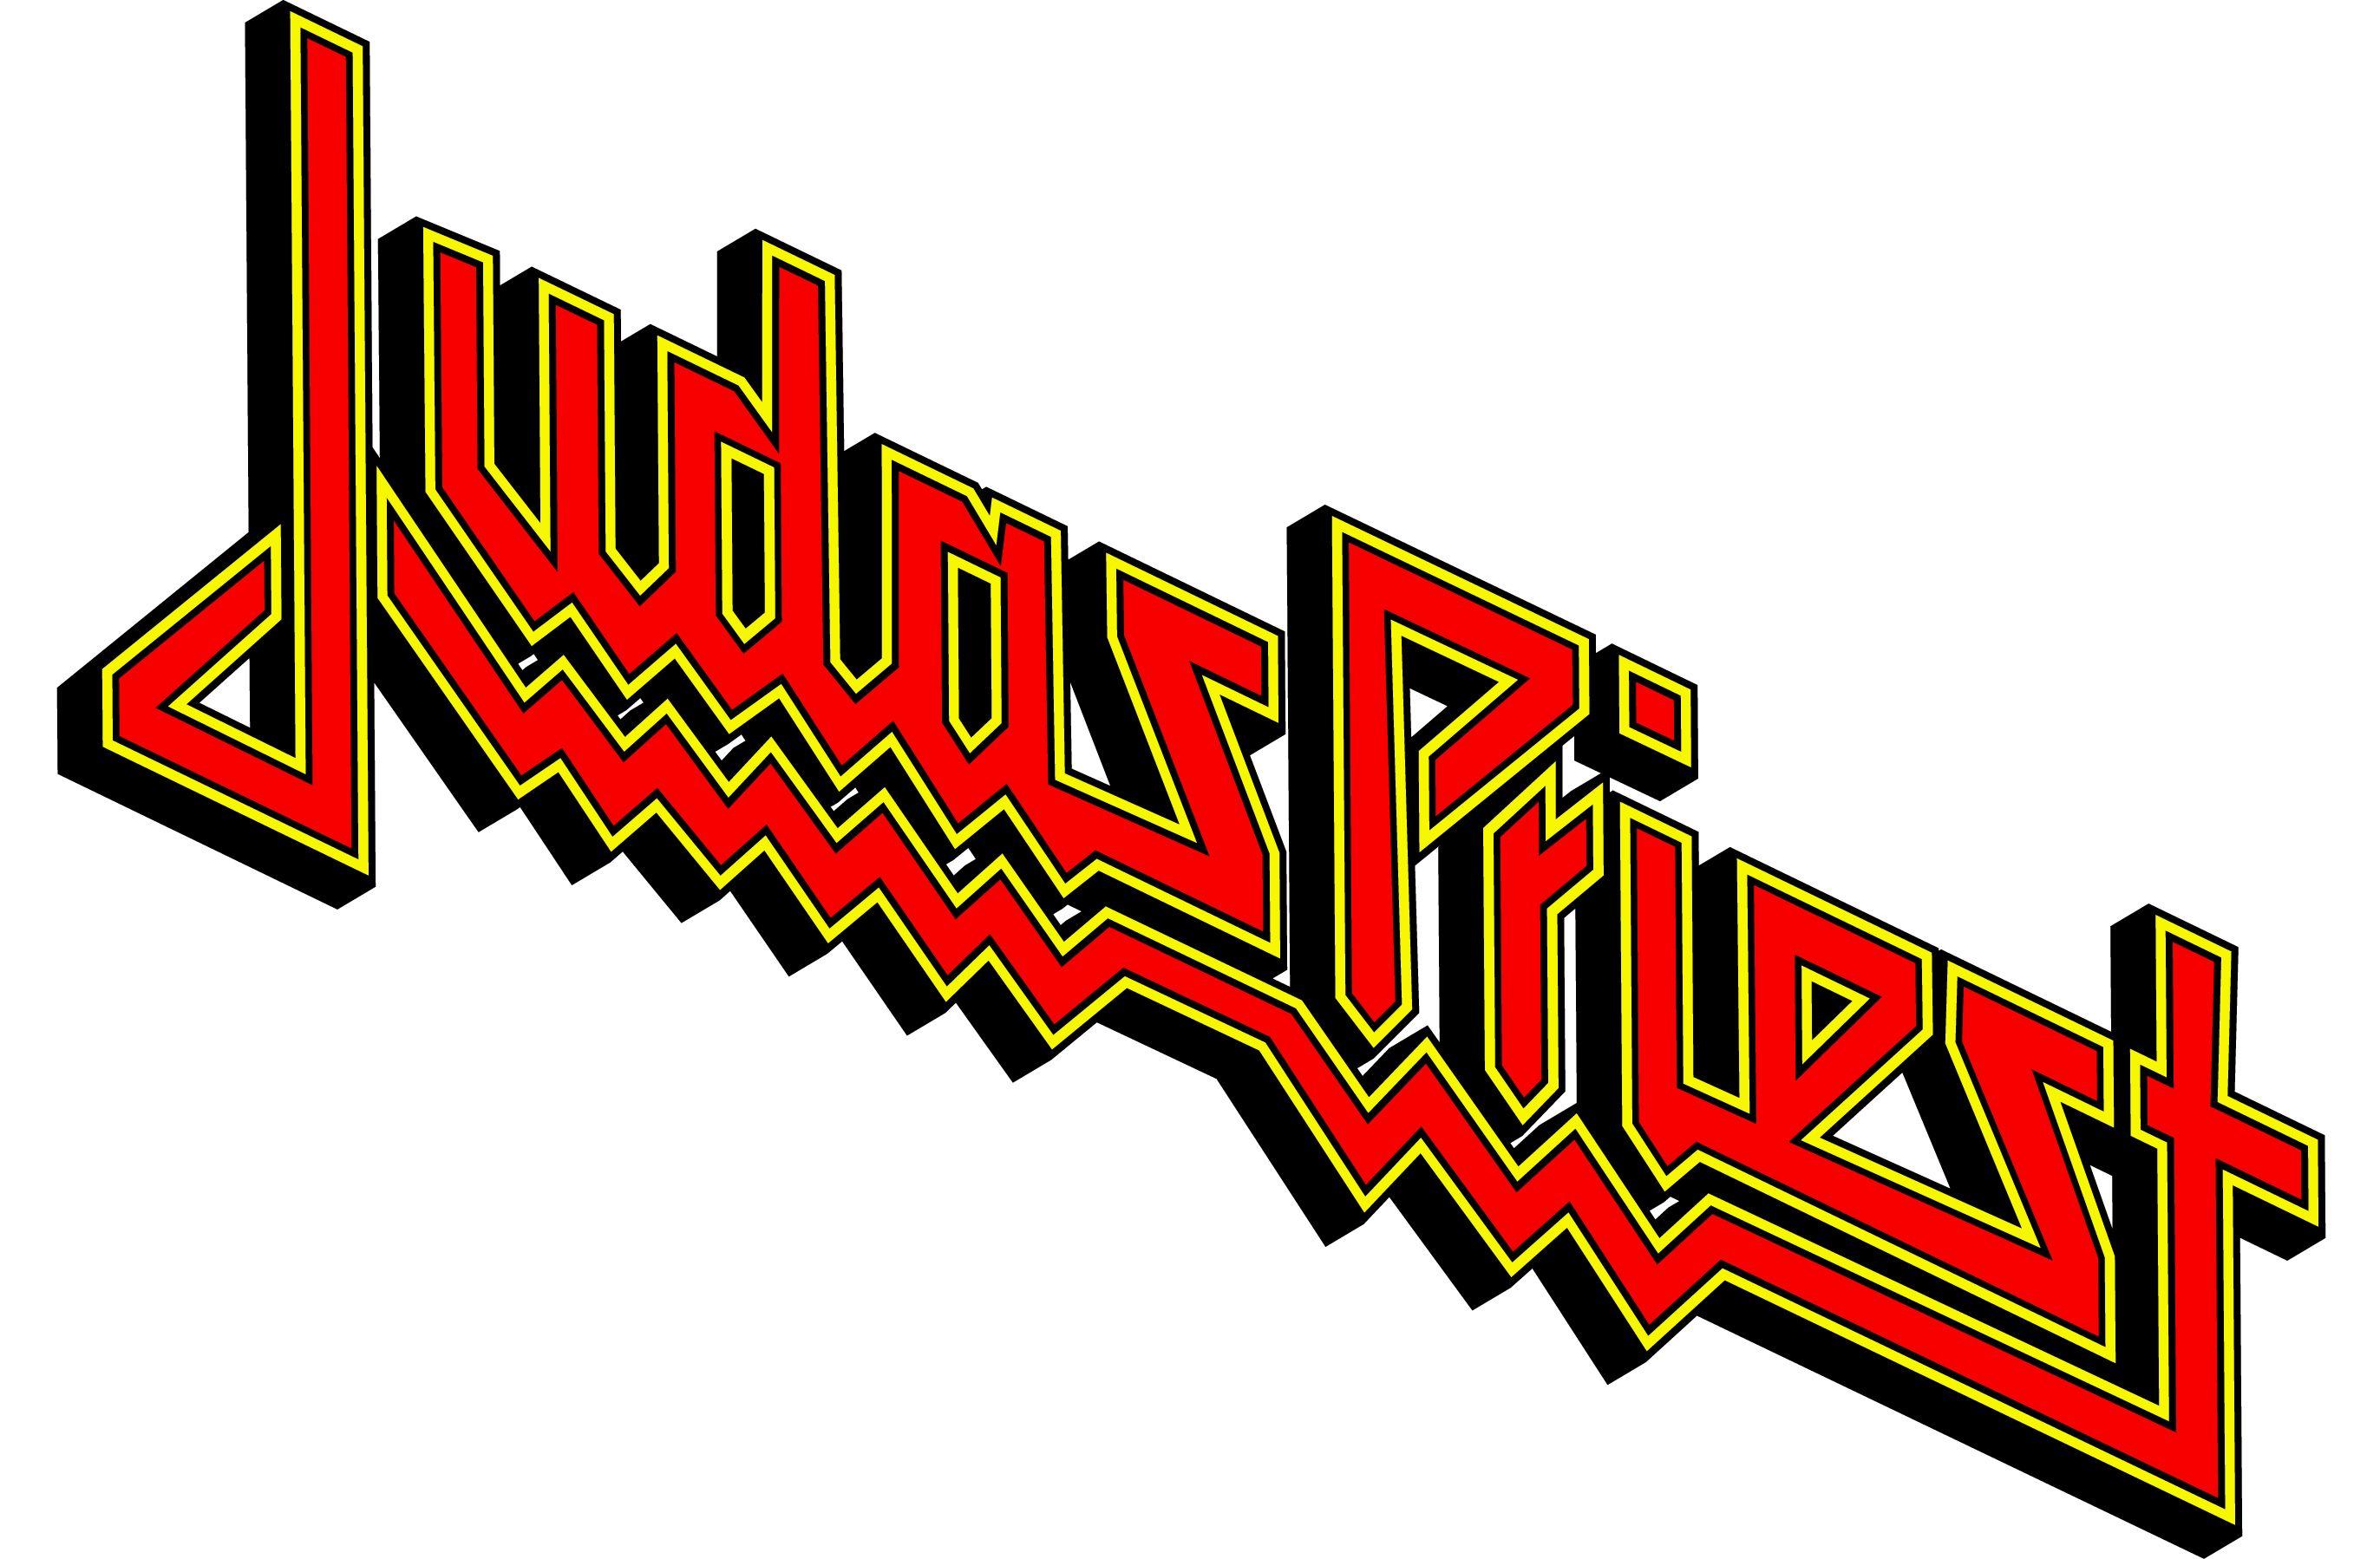 Judas Priest Original Logo - Judas priest Logos